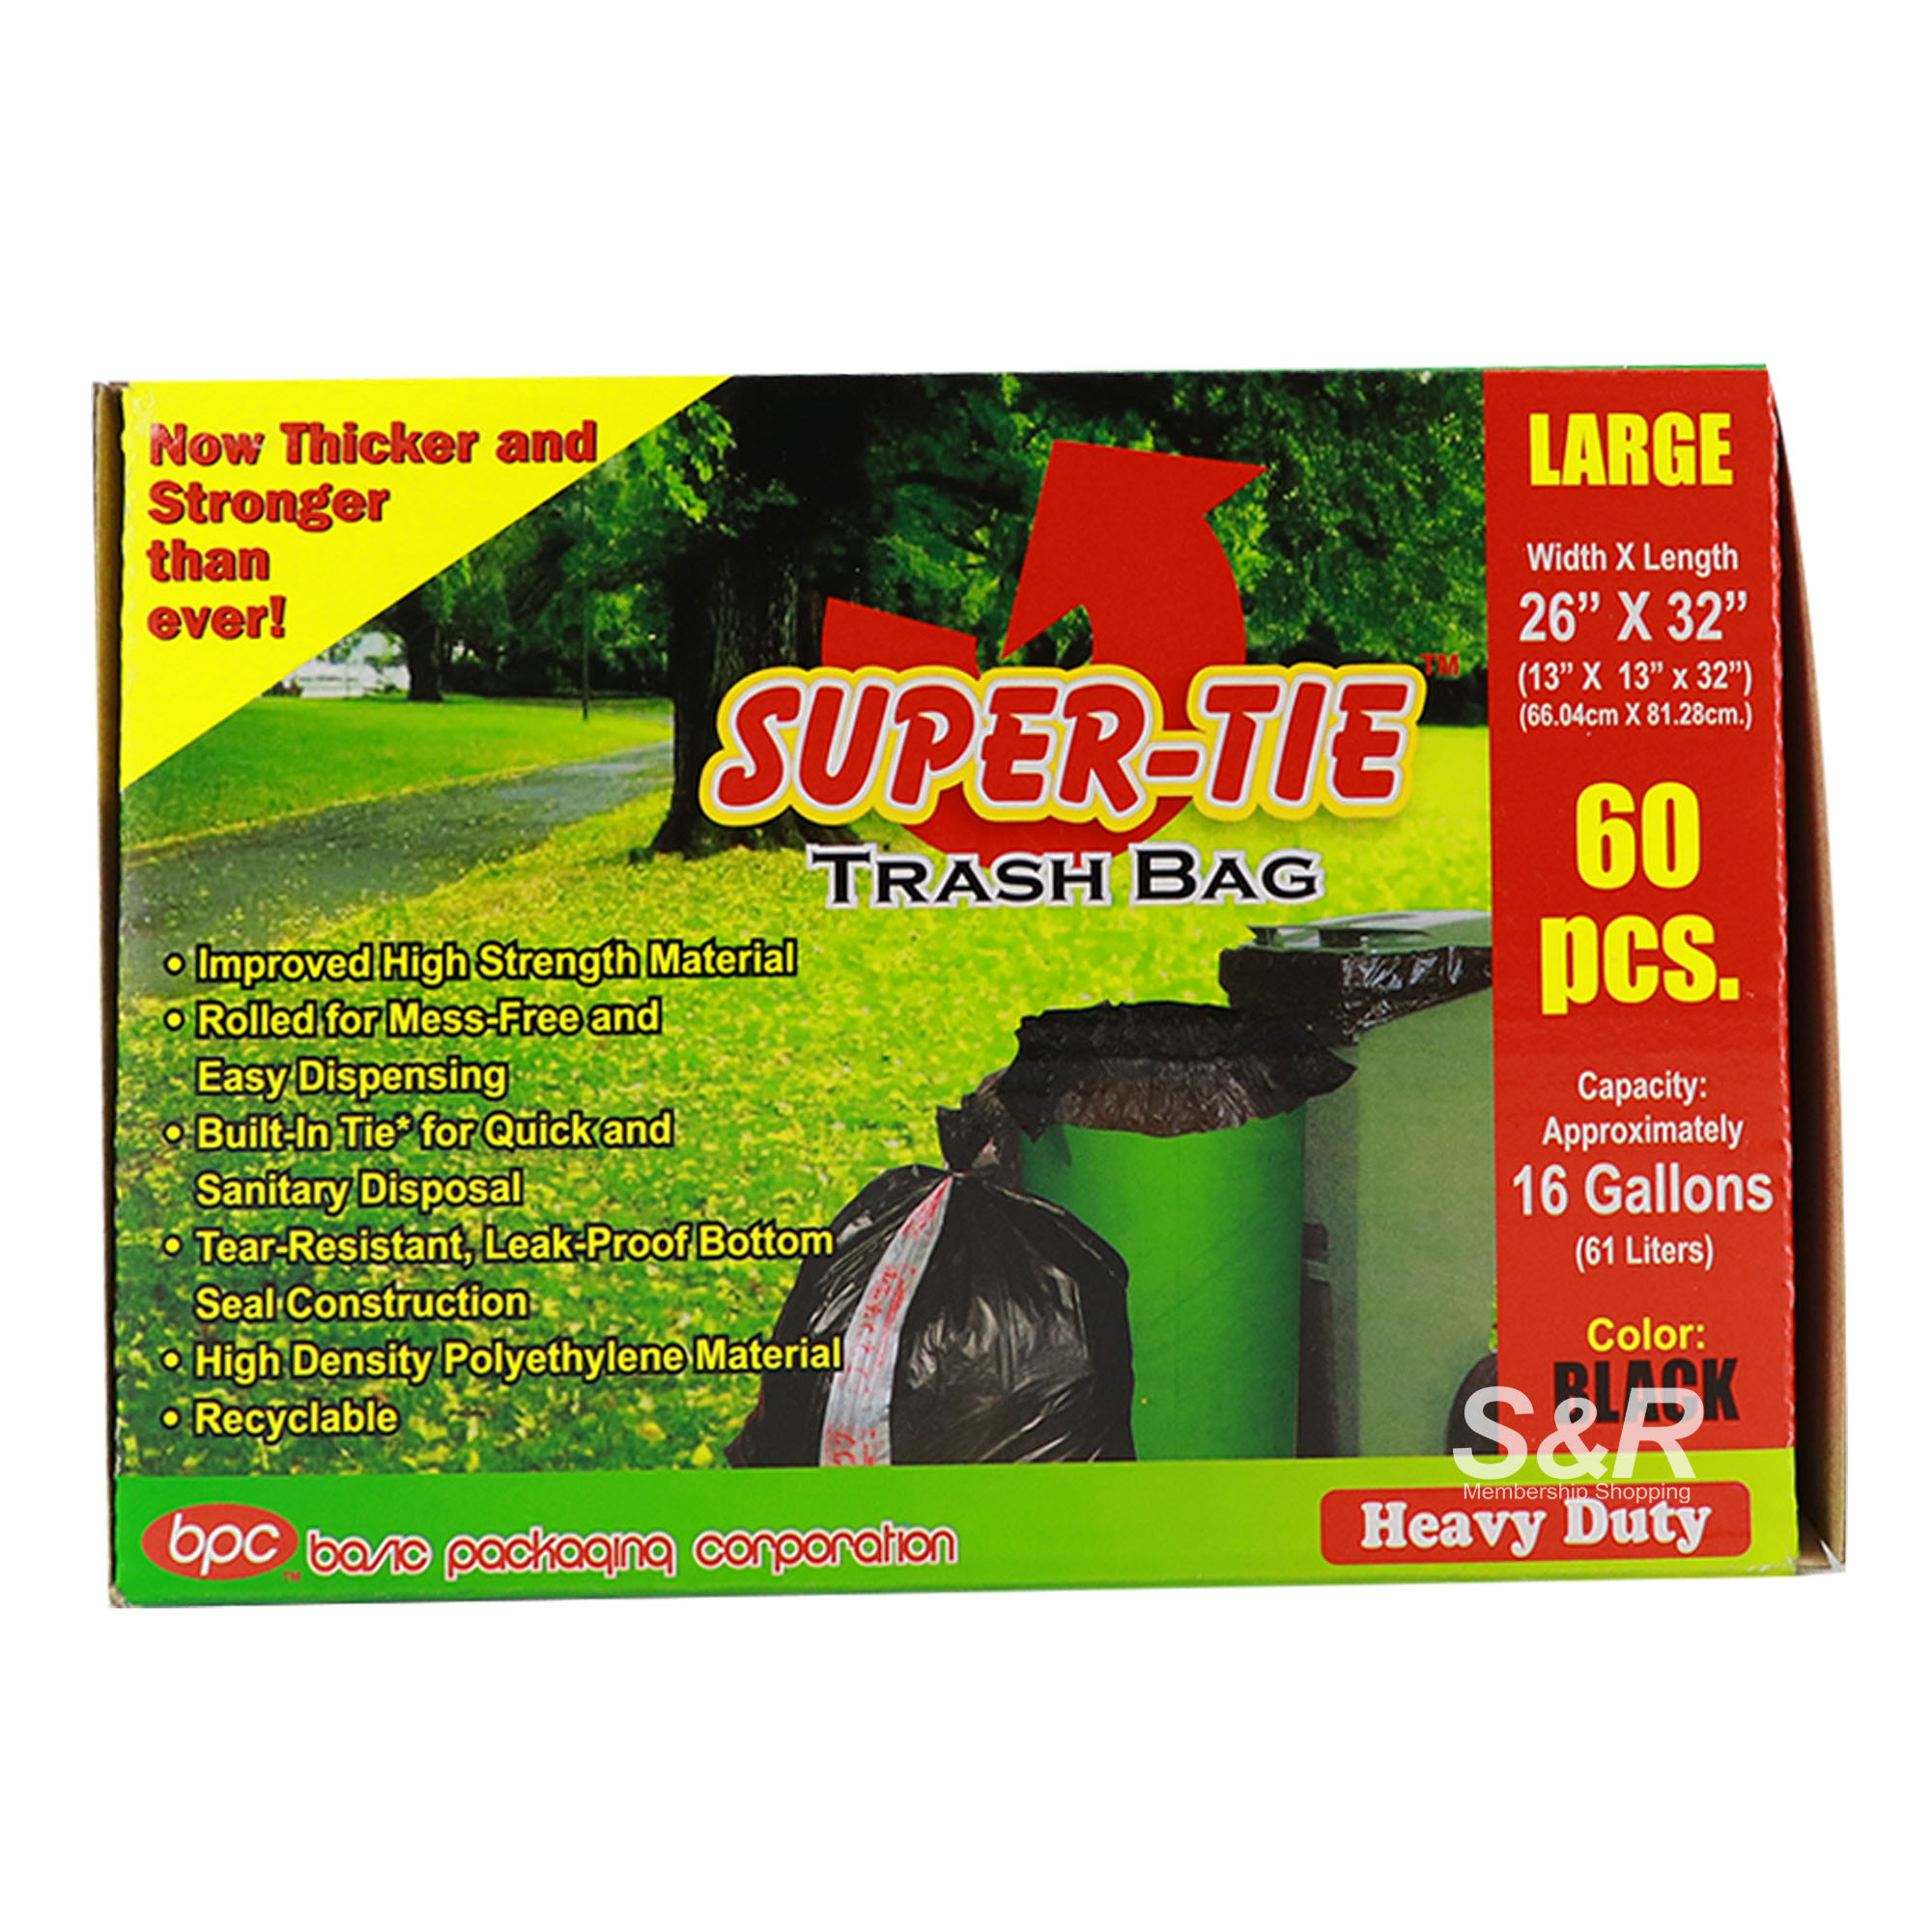 Super-Tie Trash Bag Large 60pcs